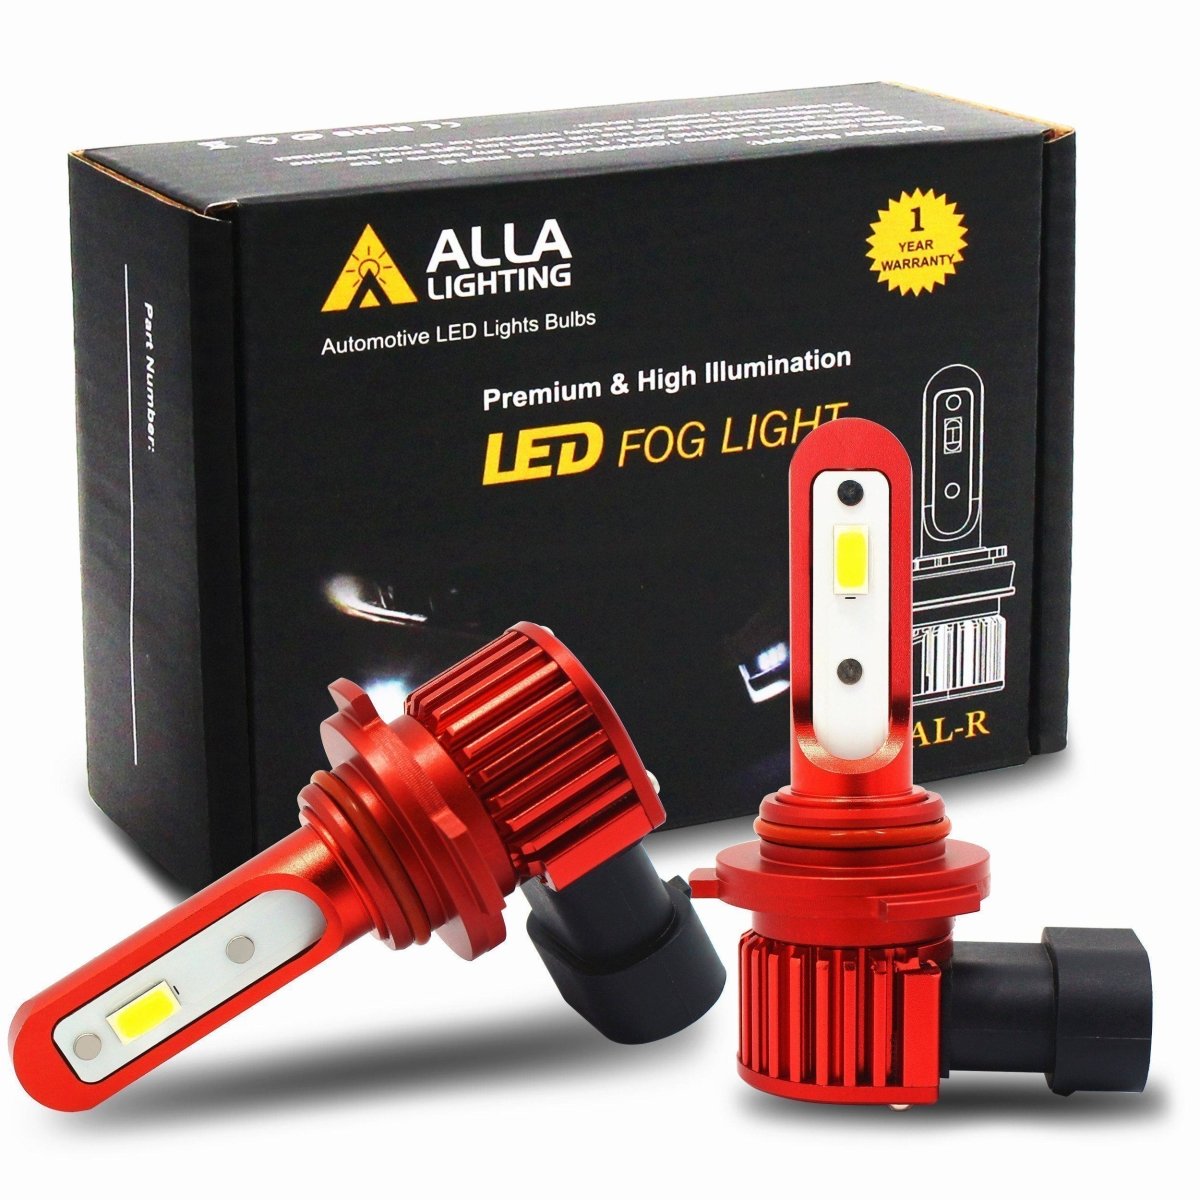 AL-R H10 9145 LED Fog Lights Bulbs Replacement for Cars Trucks -Alla Lighting